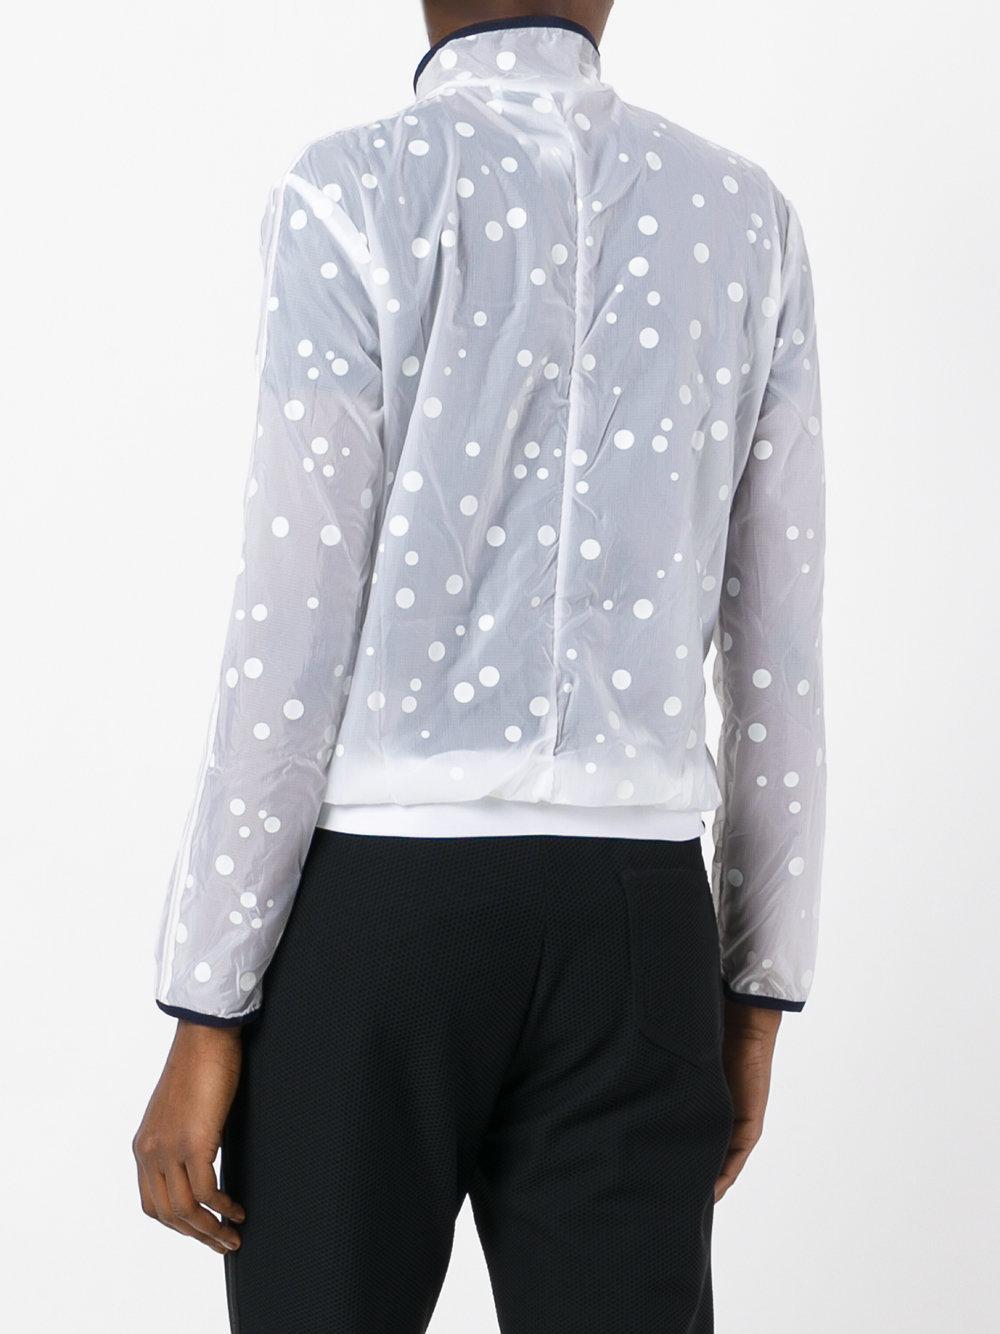 adidas Originals Transparent Polka Dot Track Jacket in White | Lyst